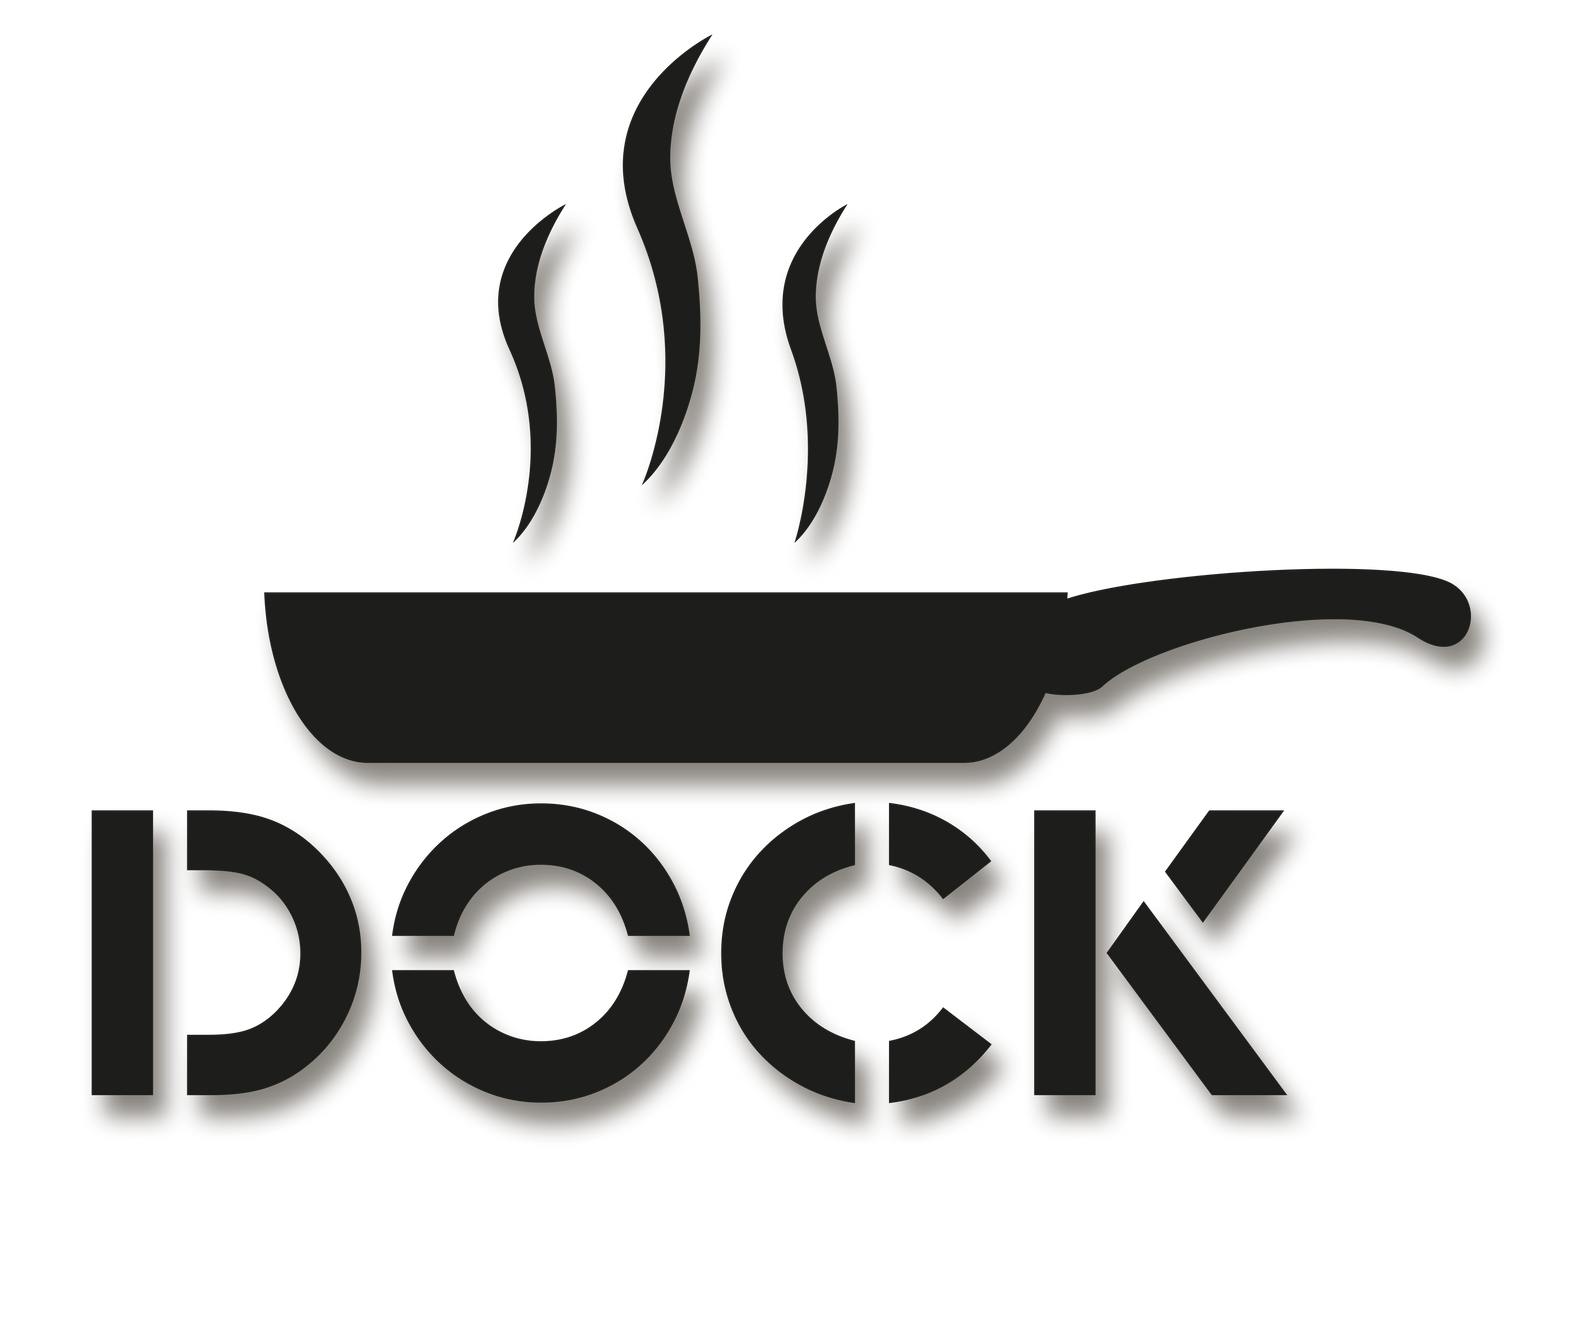 www.dockoutdoors.com